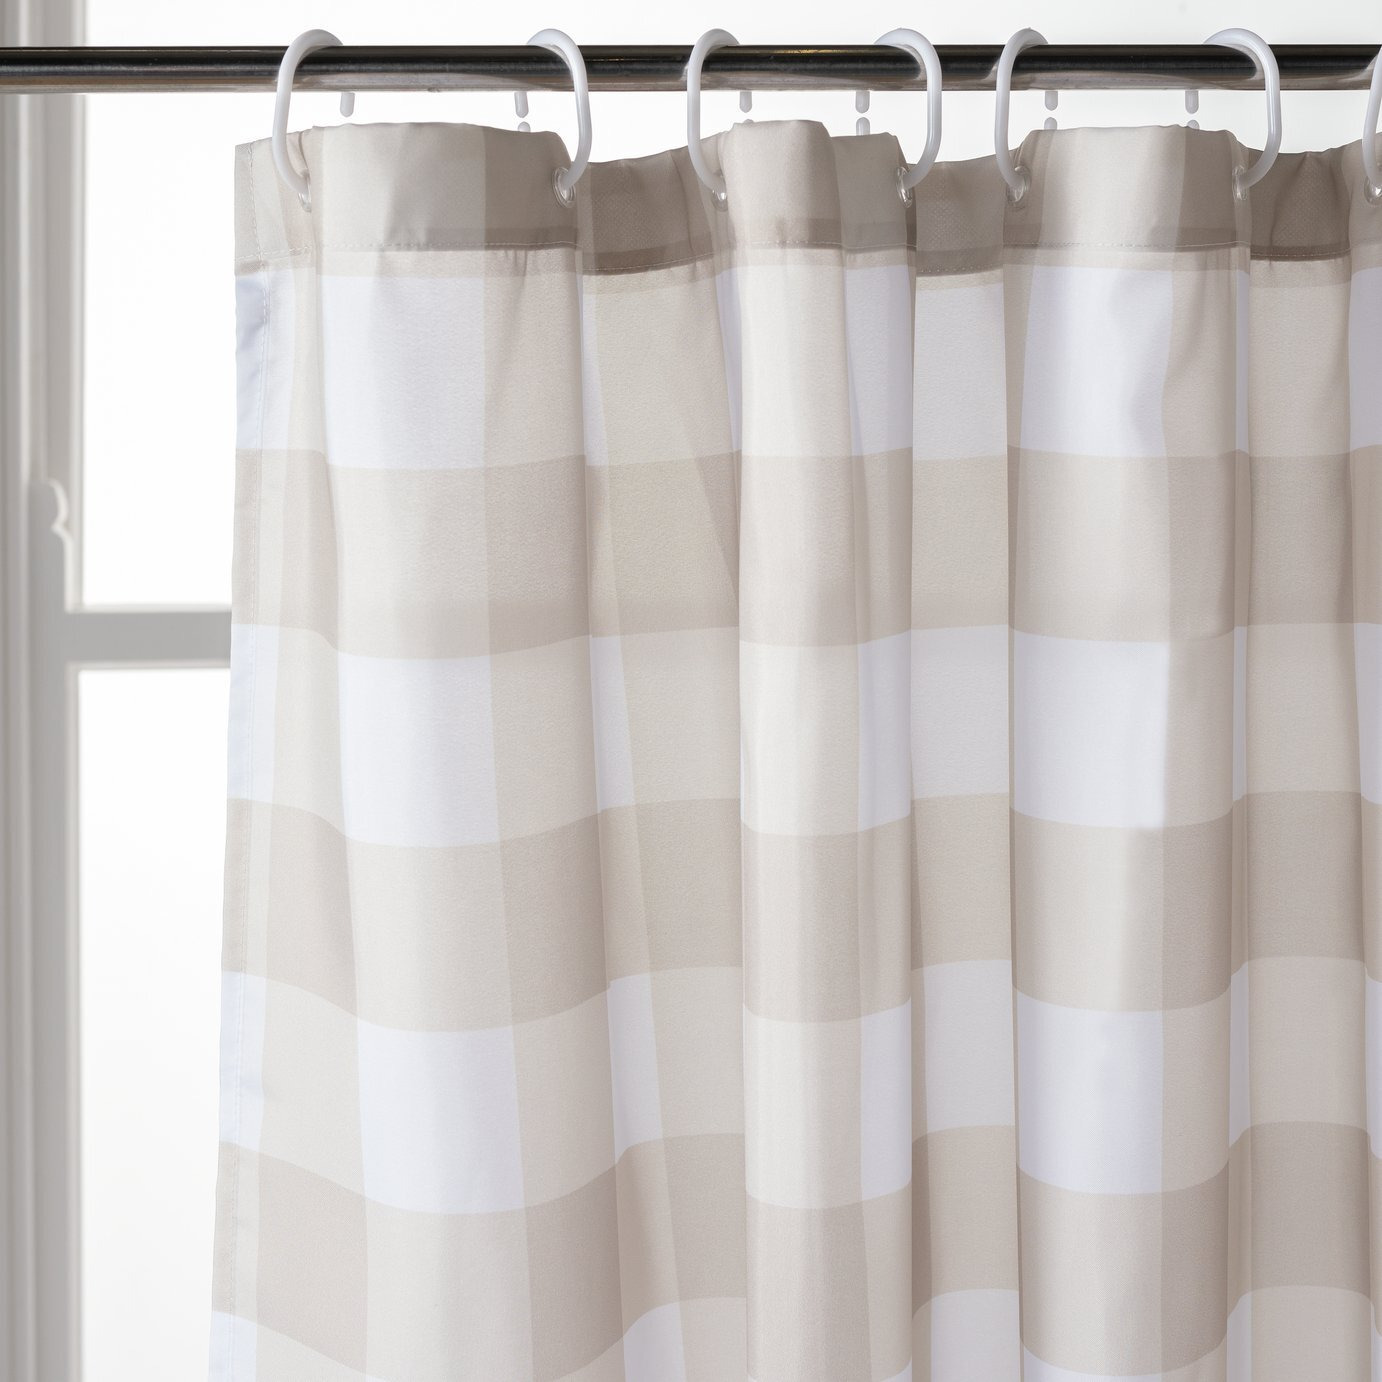 Habitat Neutral Print Anti Bac Finish Shower Curtain-Natural - image 1